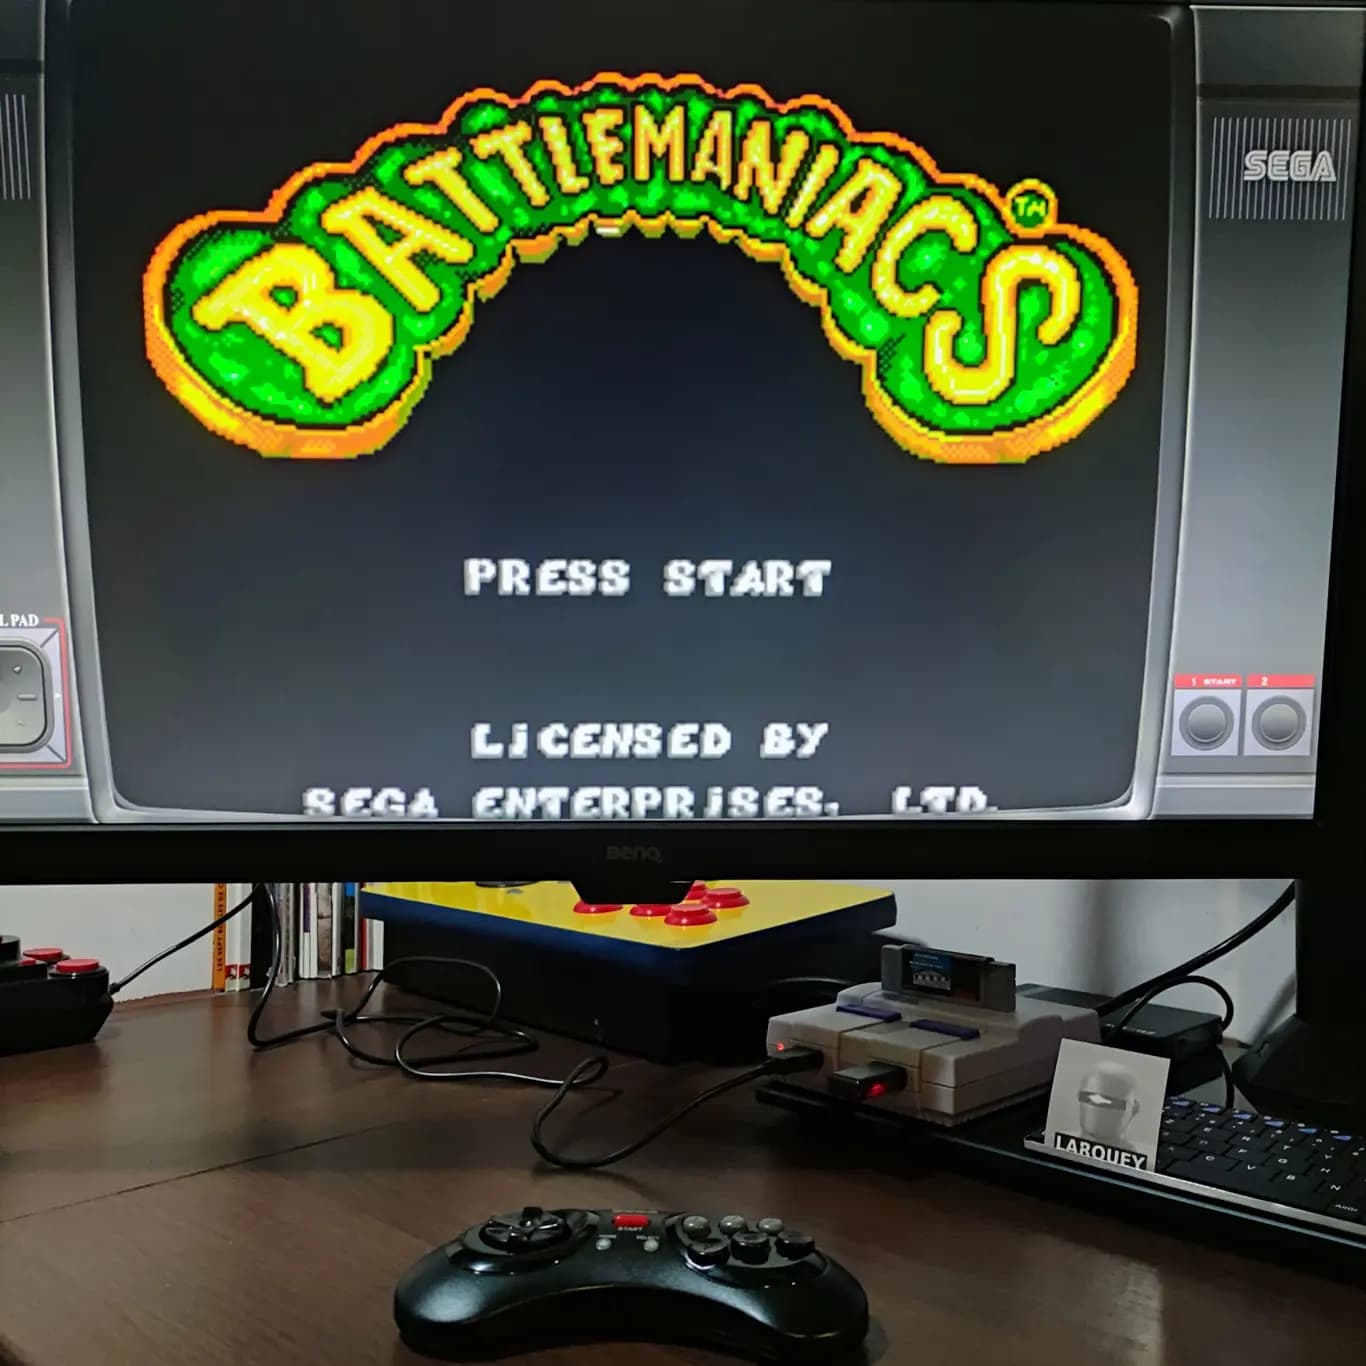 Larquey: Battlemaniacs [Hard] (Sega Master System Emulated) 3,450 points on 2022-08-14 04:52:15